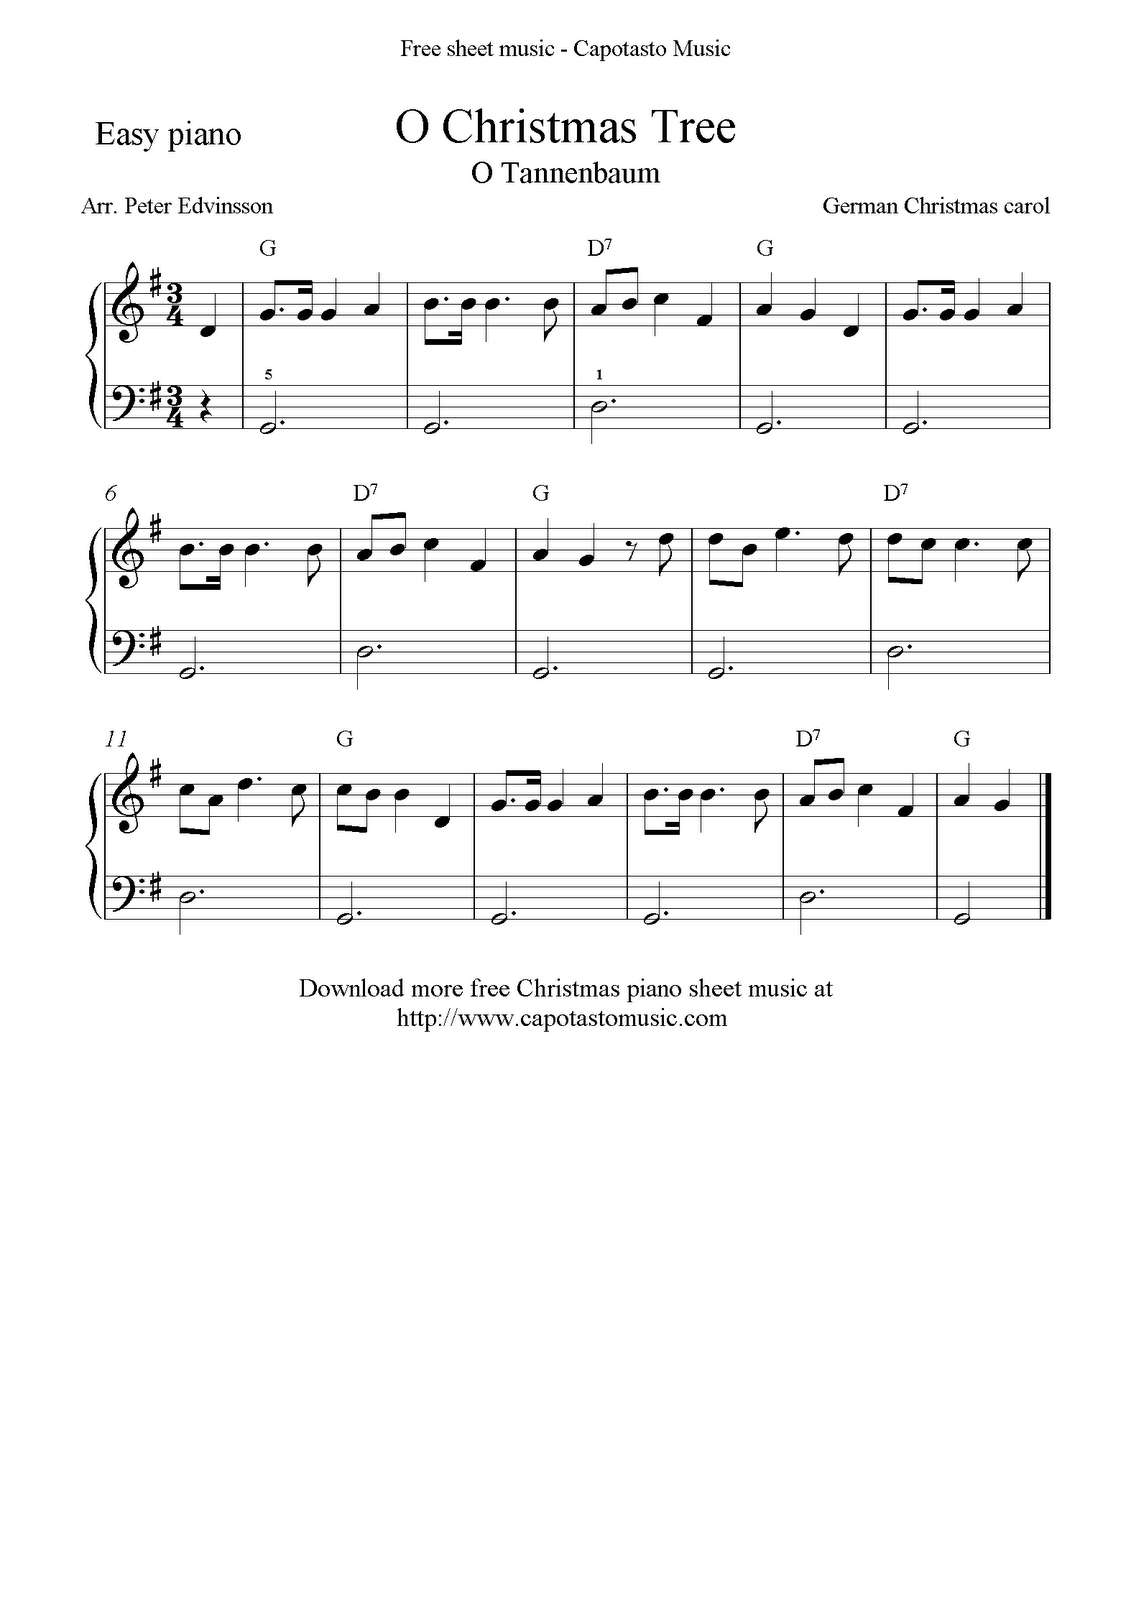 Free Christmas Sheet Music For Easy Piano Solo, O Christmas Tree - Free Printable Christmas Music Sheets Piano